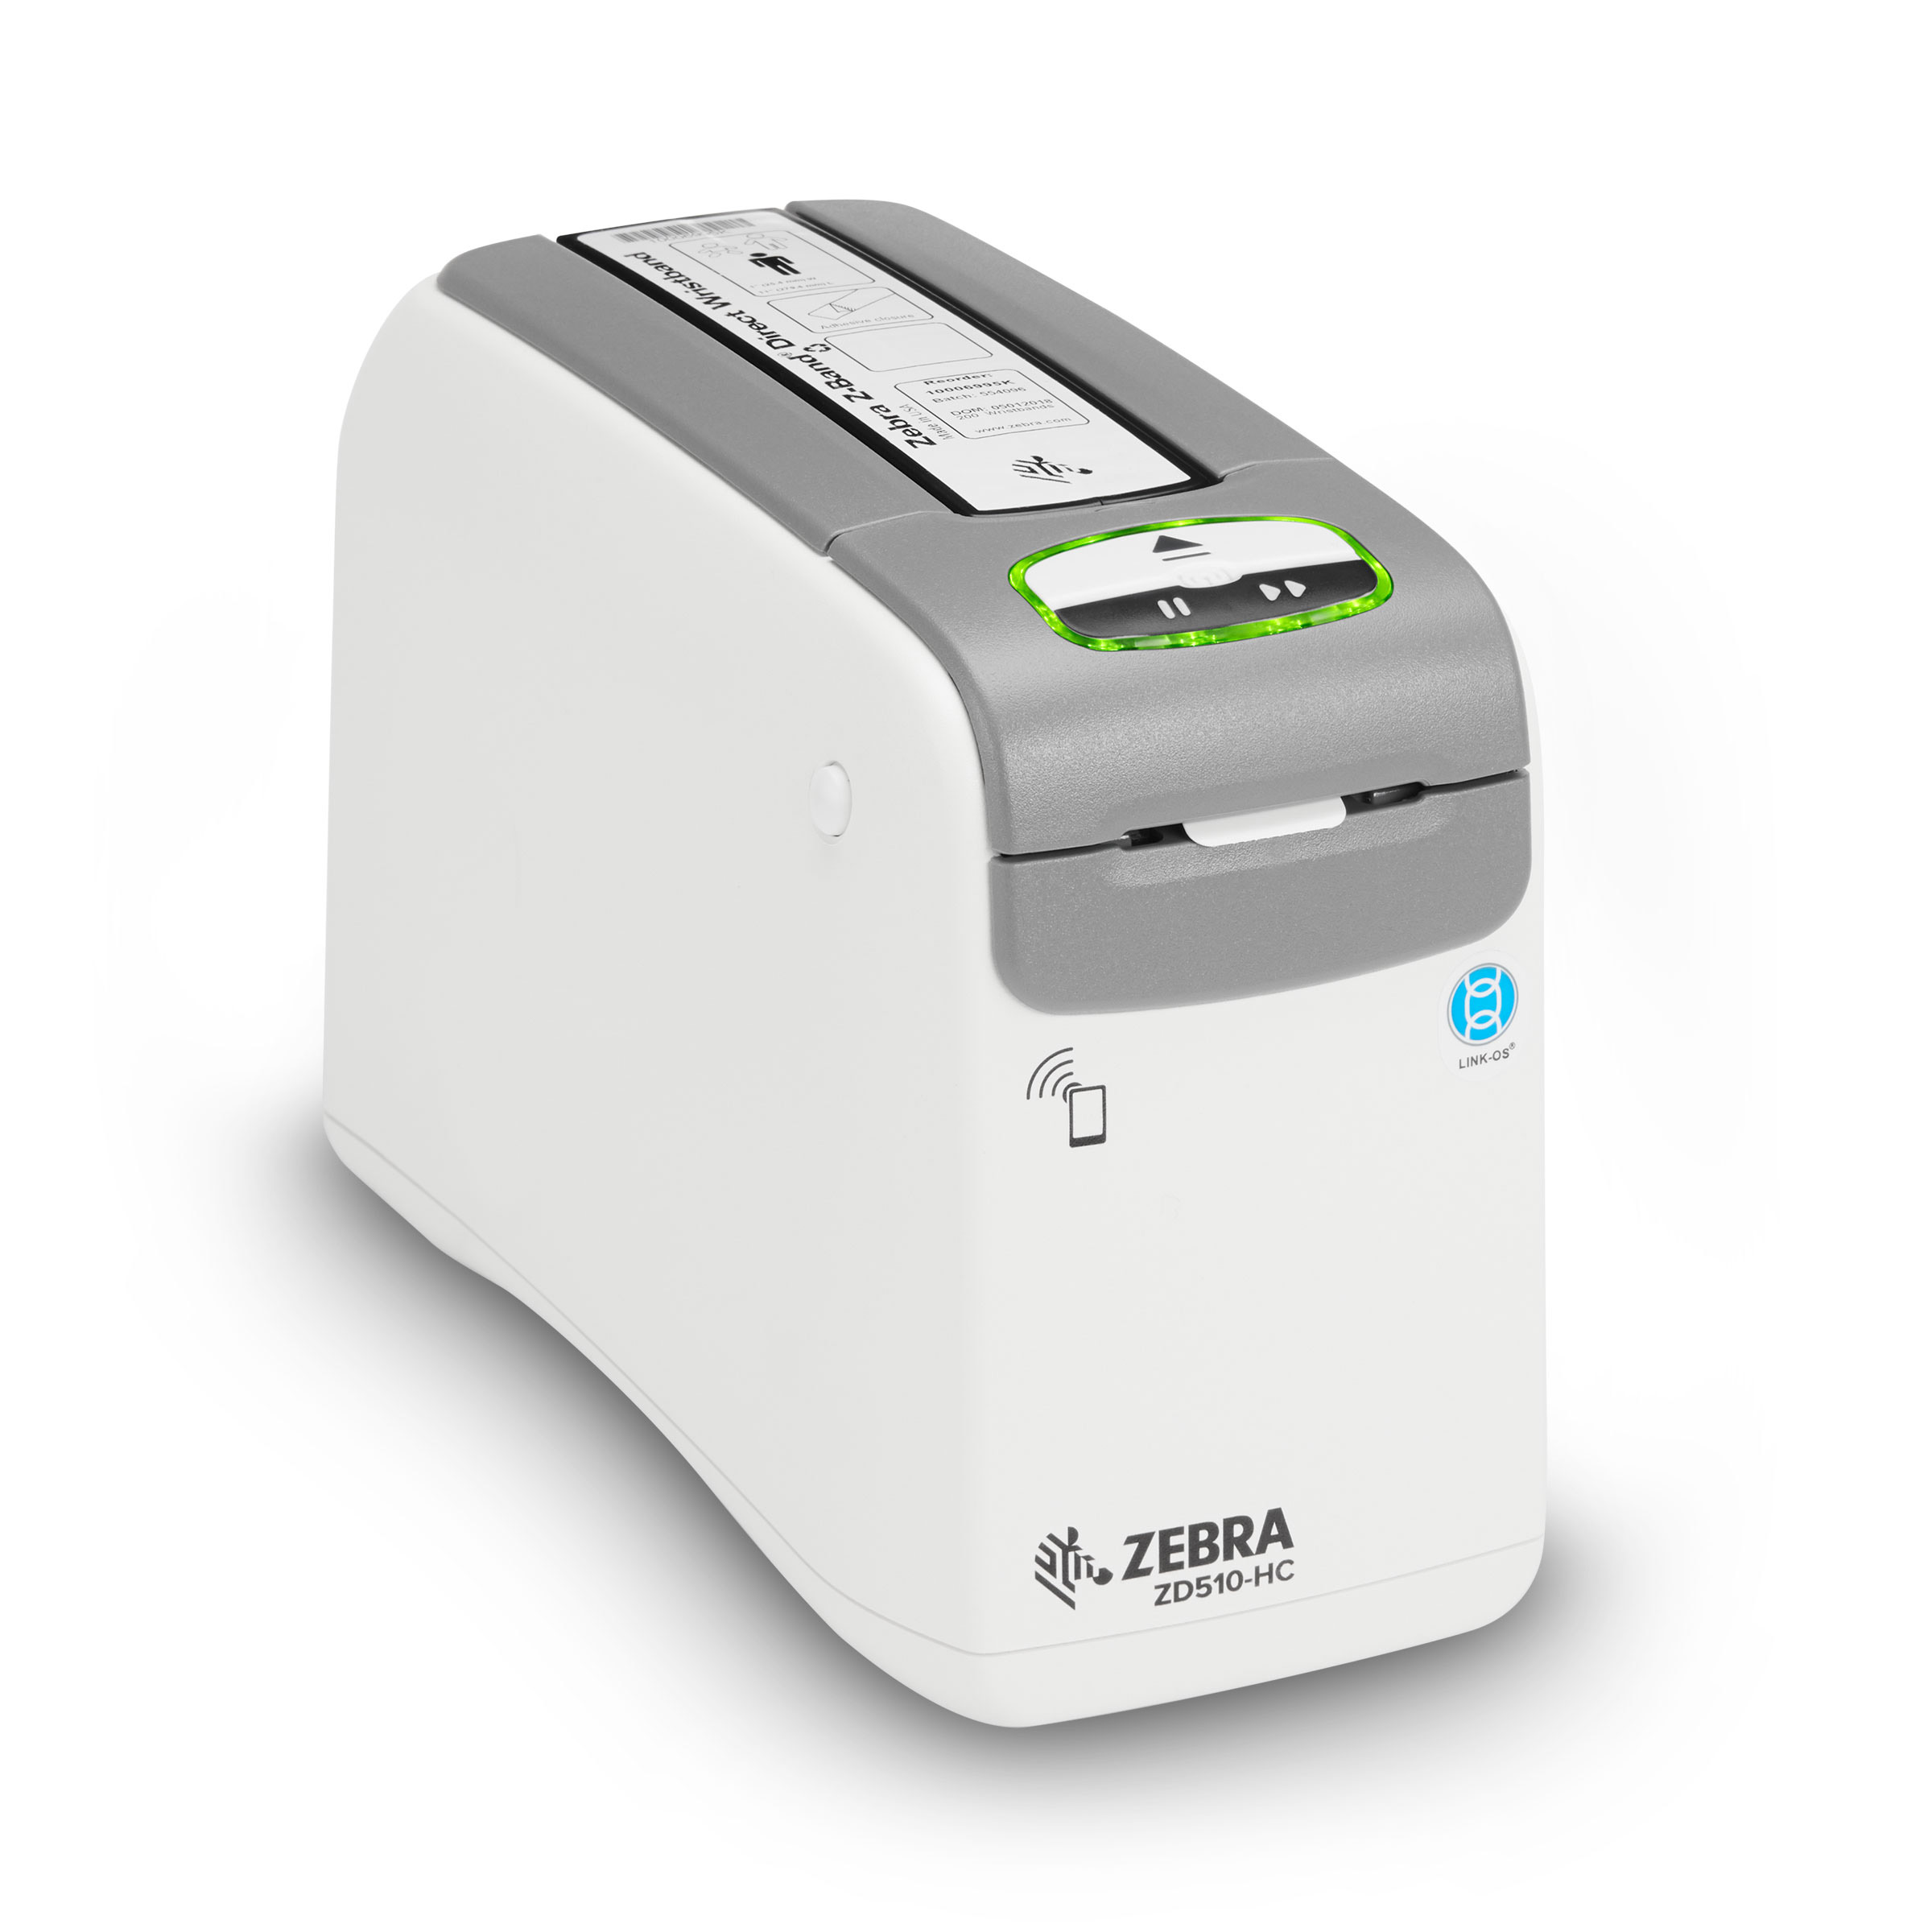 Мини принтер для этикеток. Принтер Zebra zd410. Принтер этикеток Zebra zd410. Принтер Zebra zq62-aufae11-00. Zebra 510.